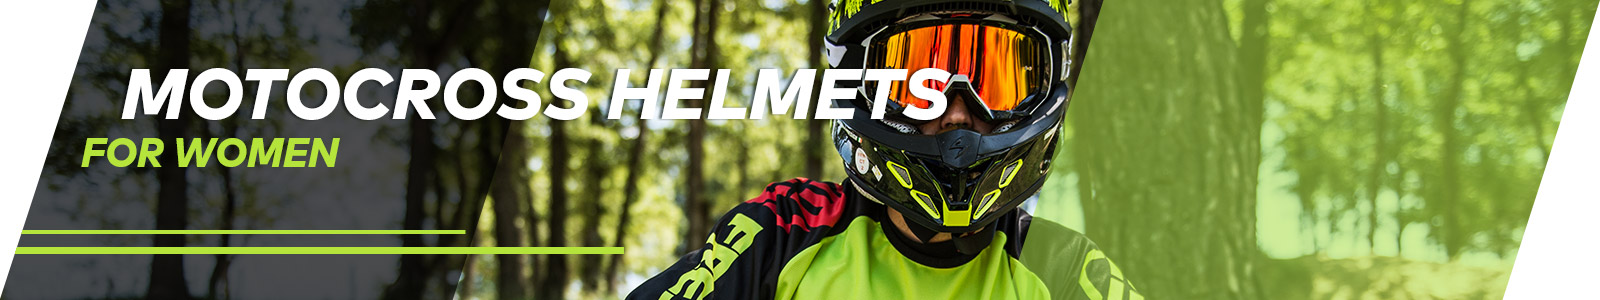 Motocross helmet for ladies